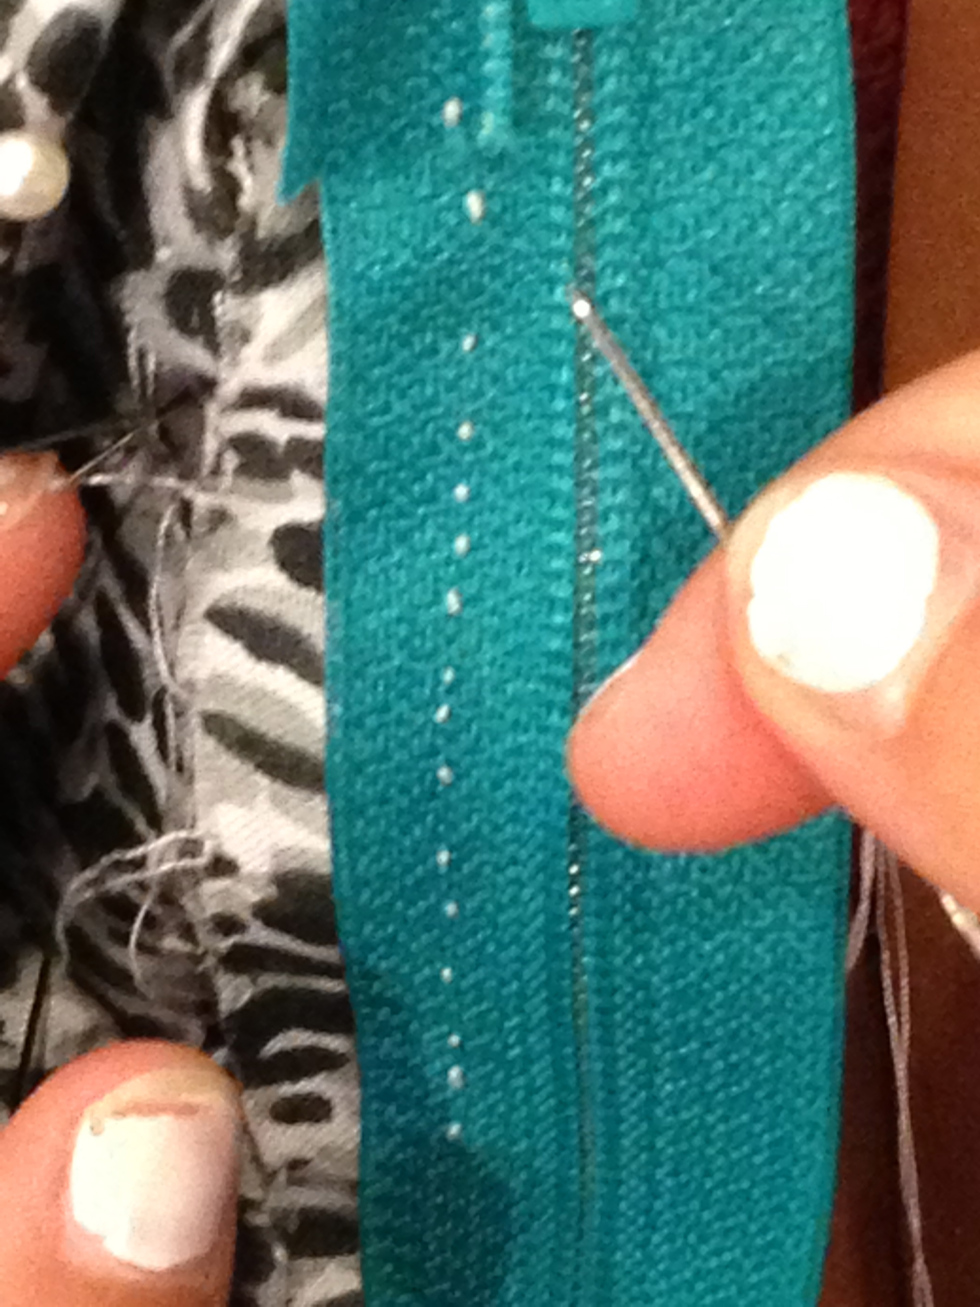  Perfect small stitches on the zipper. 